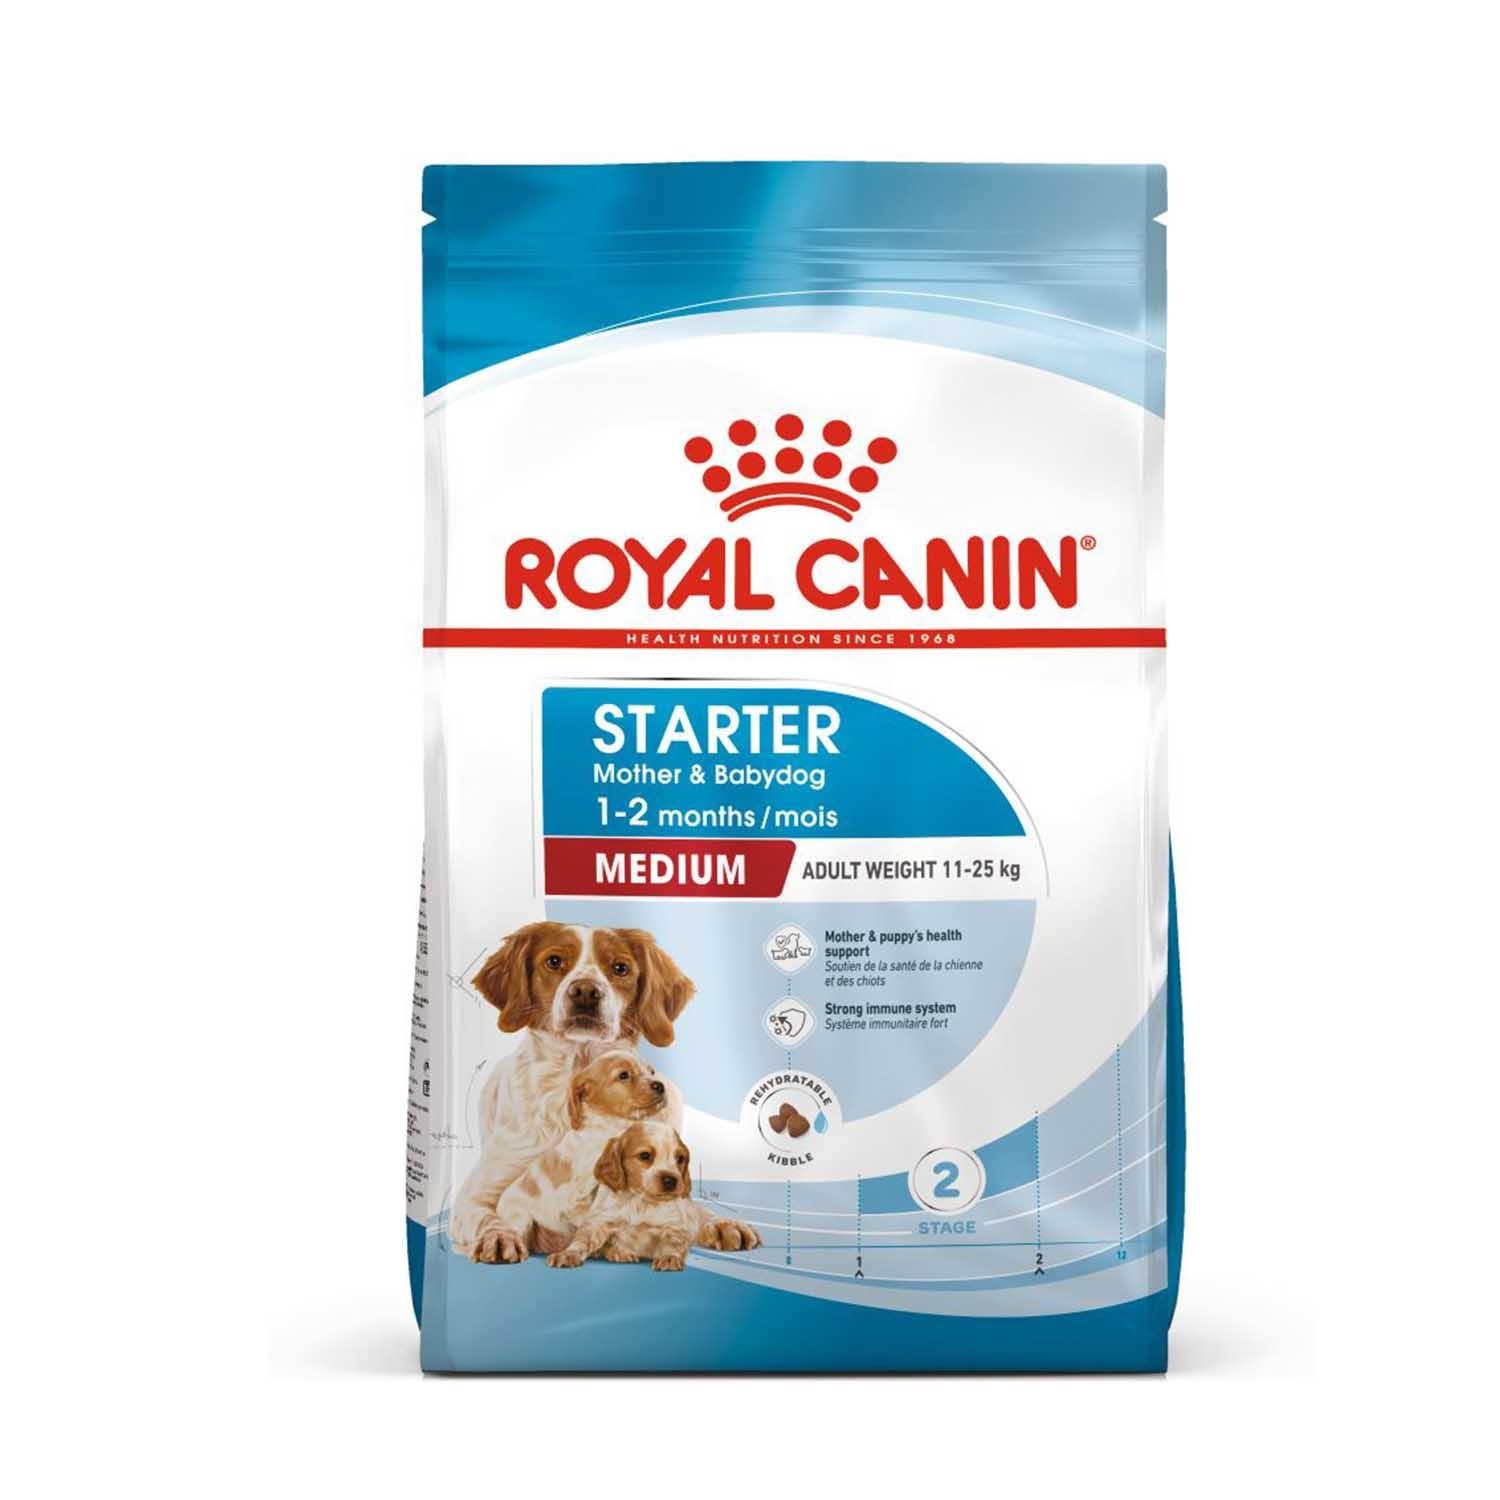 Royal Canin Starter Medium Mother & Babydog Köpek Maması 4 KG